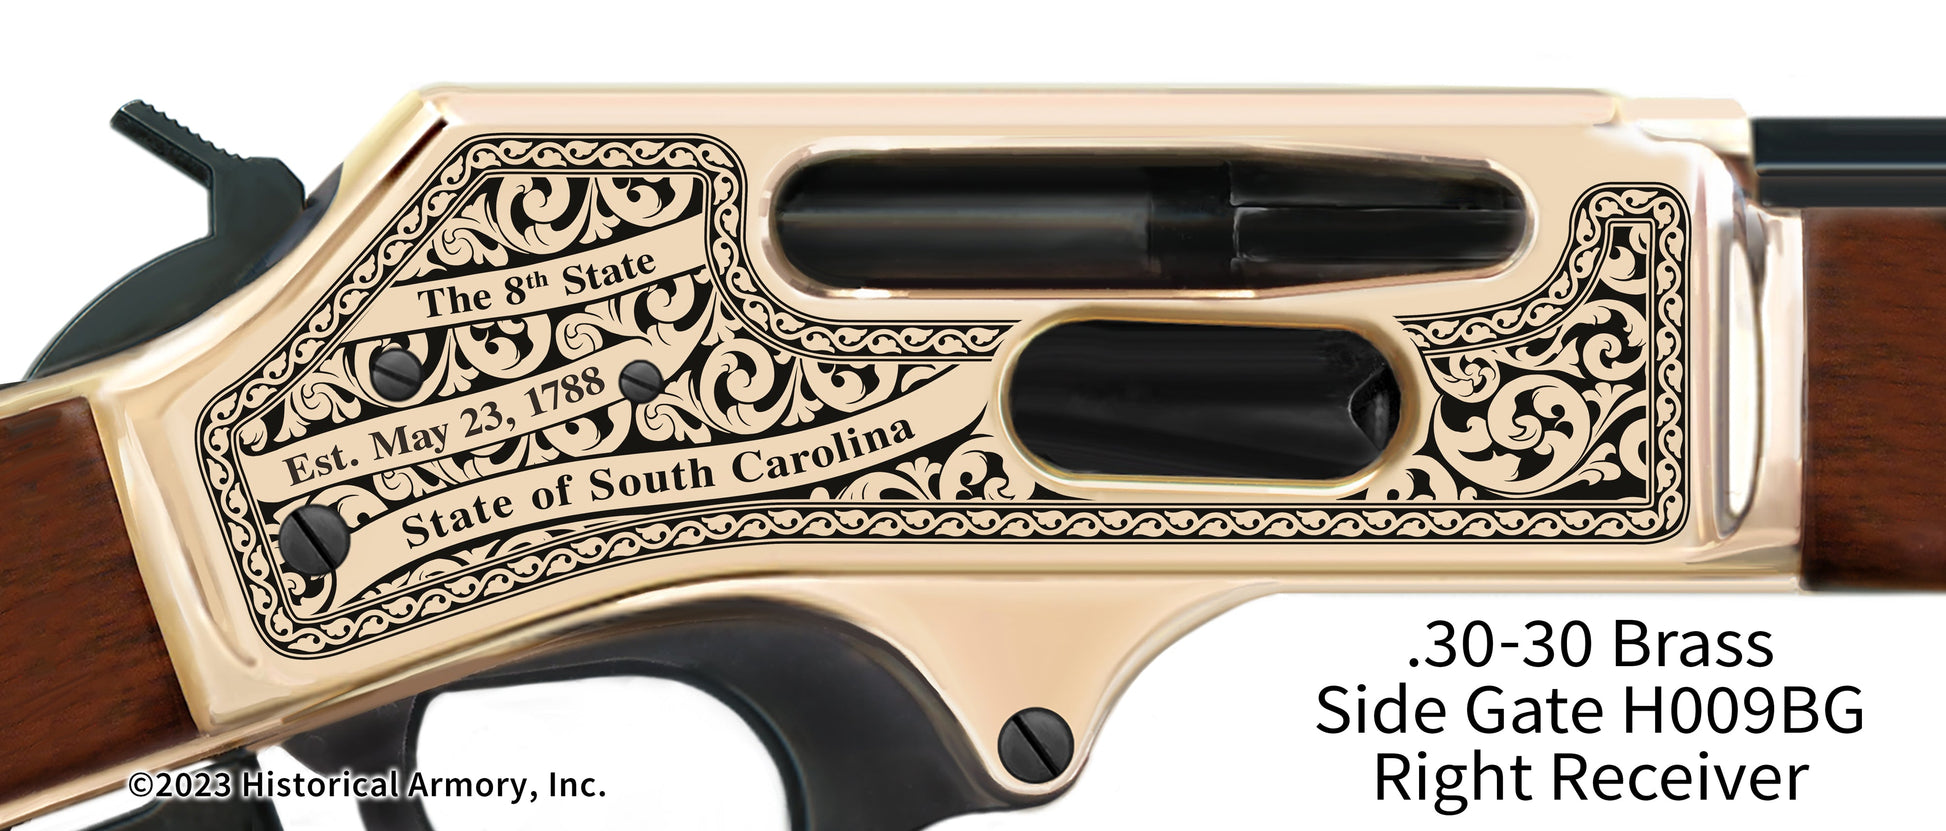 Horry County South Carolina Engraved Henry .30-30 Brass Side Gate Rifle